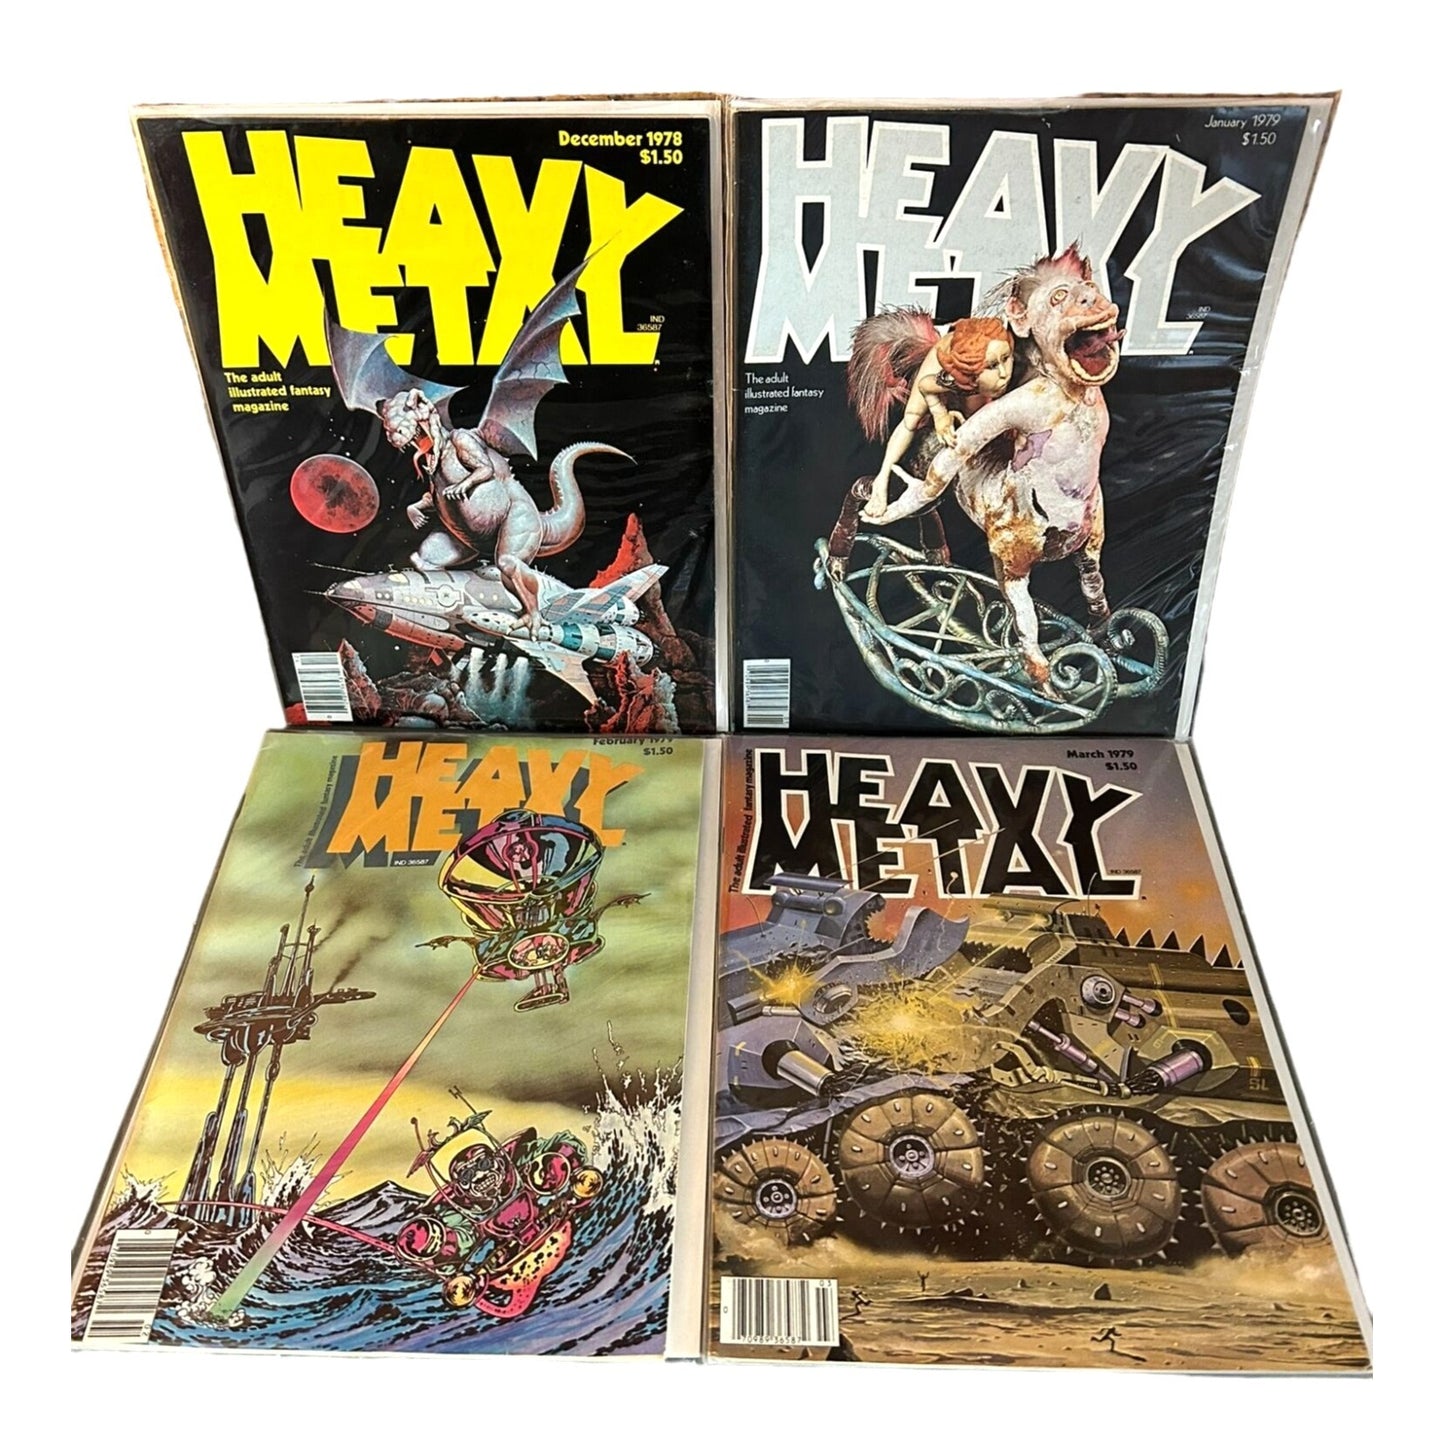 Heavy Metal Magazine - Full Run Apr. 1977 - July 1981 #1-52 Ex. Cond. Boarded